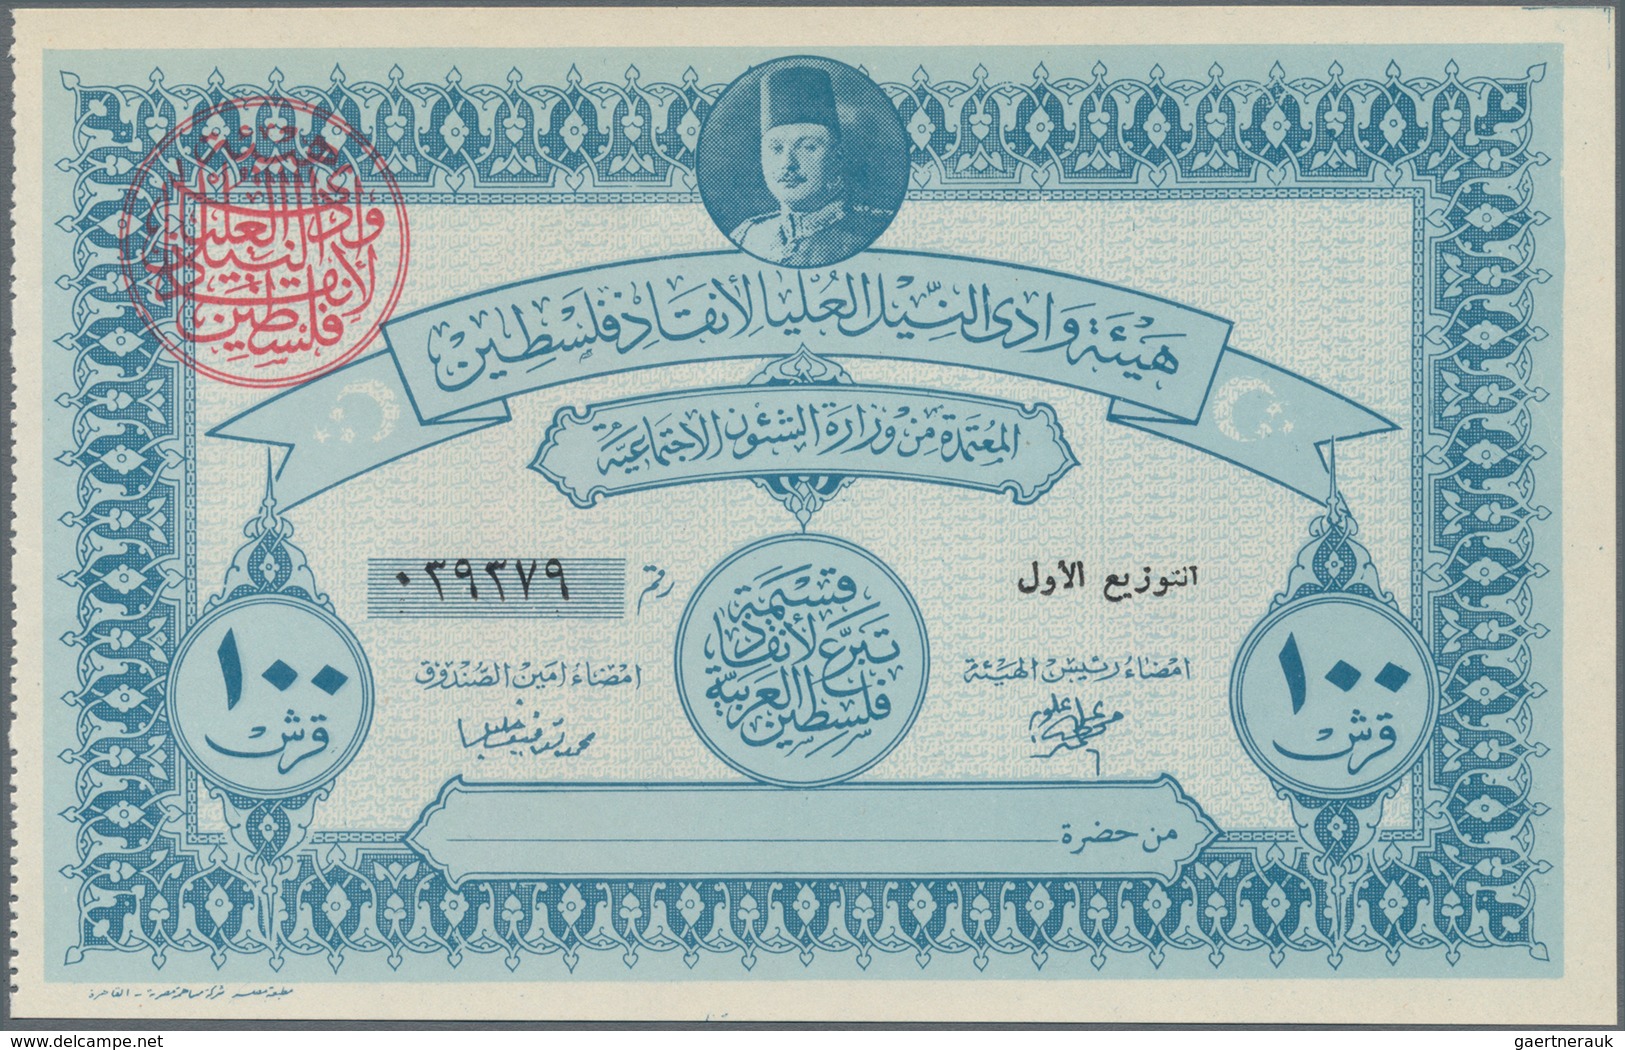 Palestine / Palästina: Set with 6 Palestine donation bonds with 5, 10, 2x 50 and 2x 100 Pounds, ND,